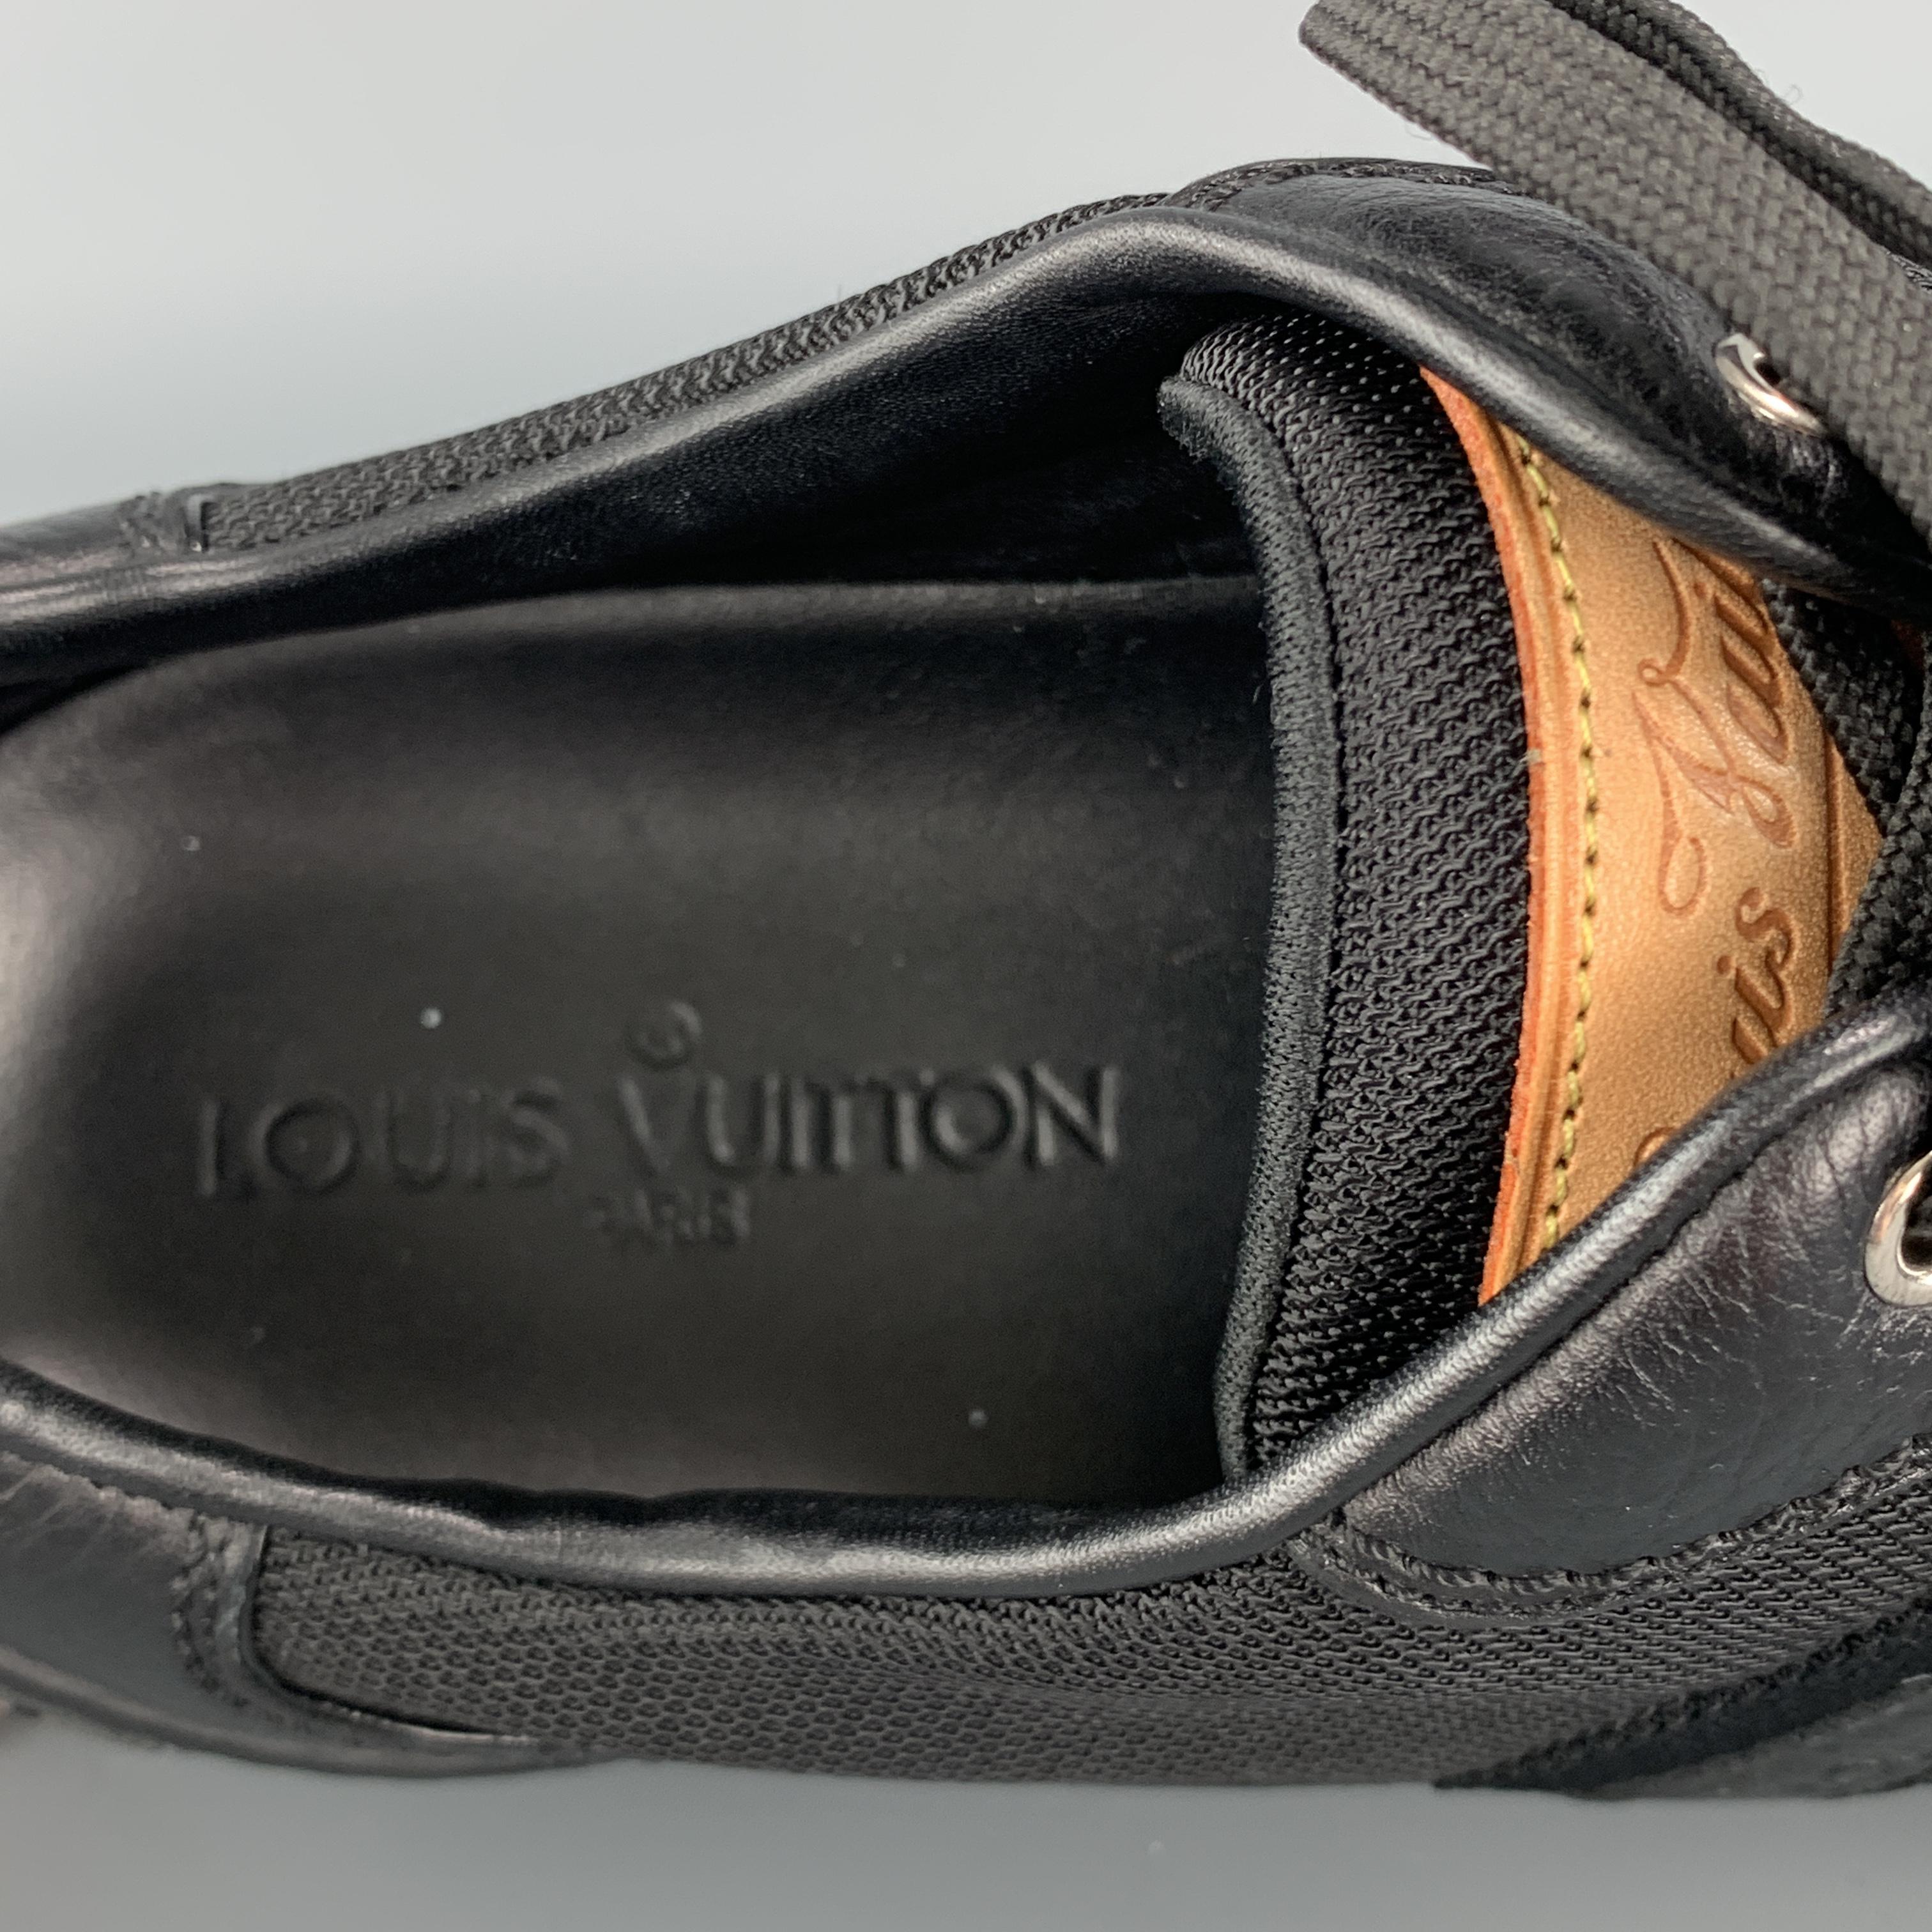 LOUIS VUITTON Size 10 Black Leather & Canvas Monogram Lace Up Sneakers 3